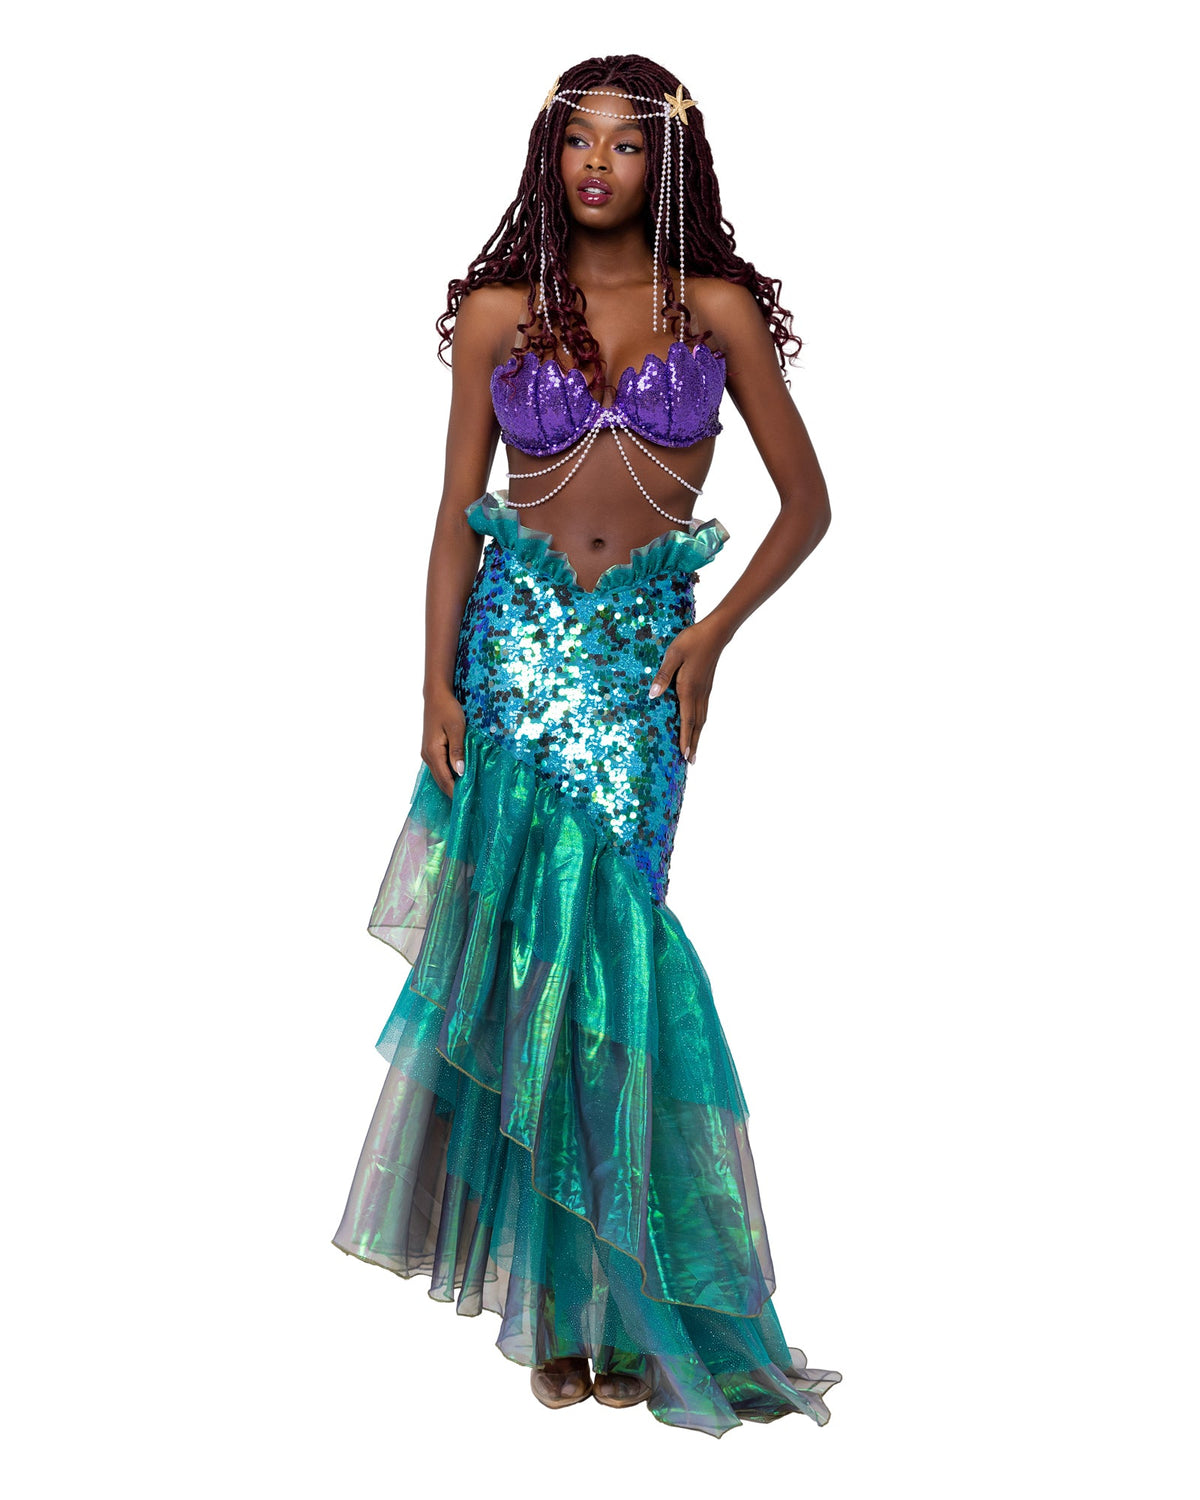 Roma Costume 6184 2PC Mesmerizing Mermaid